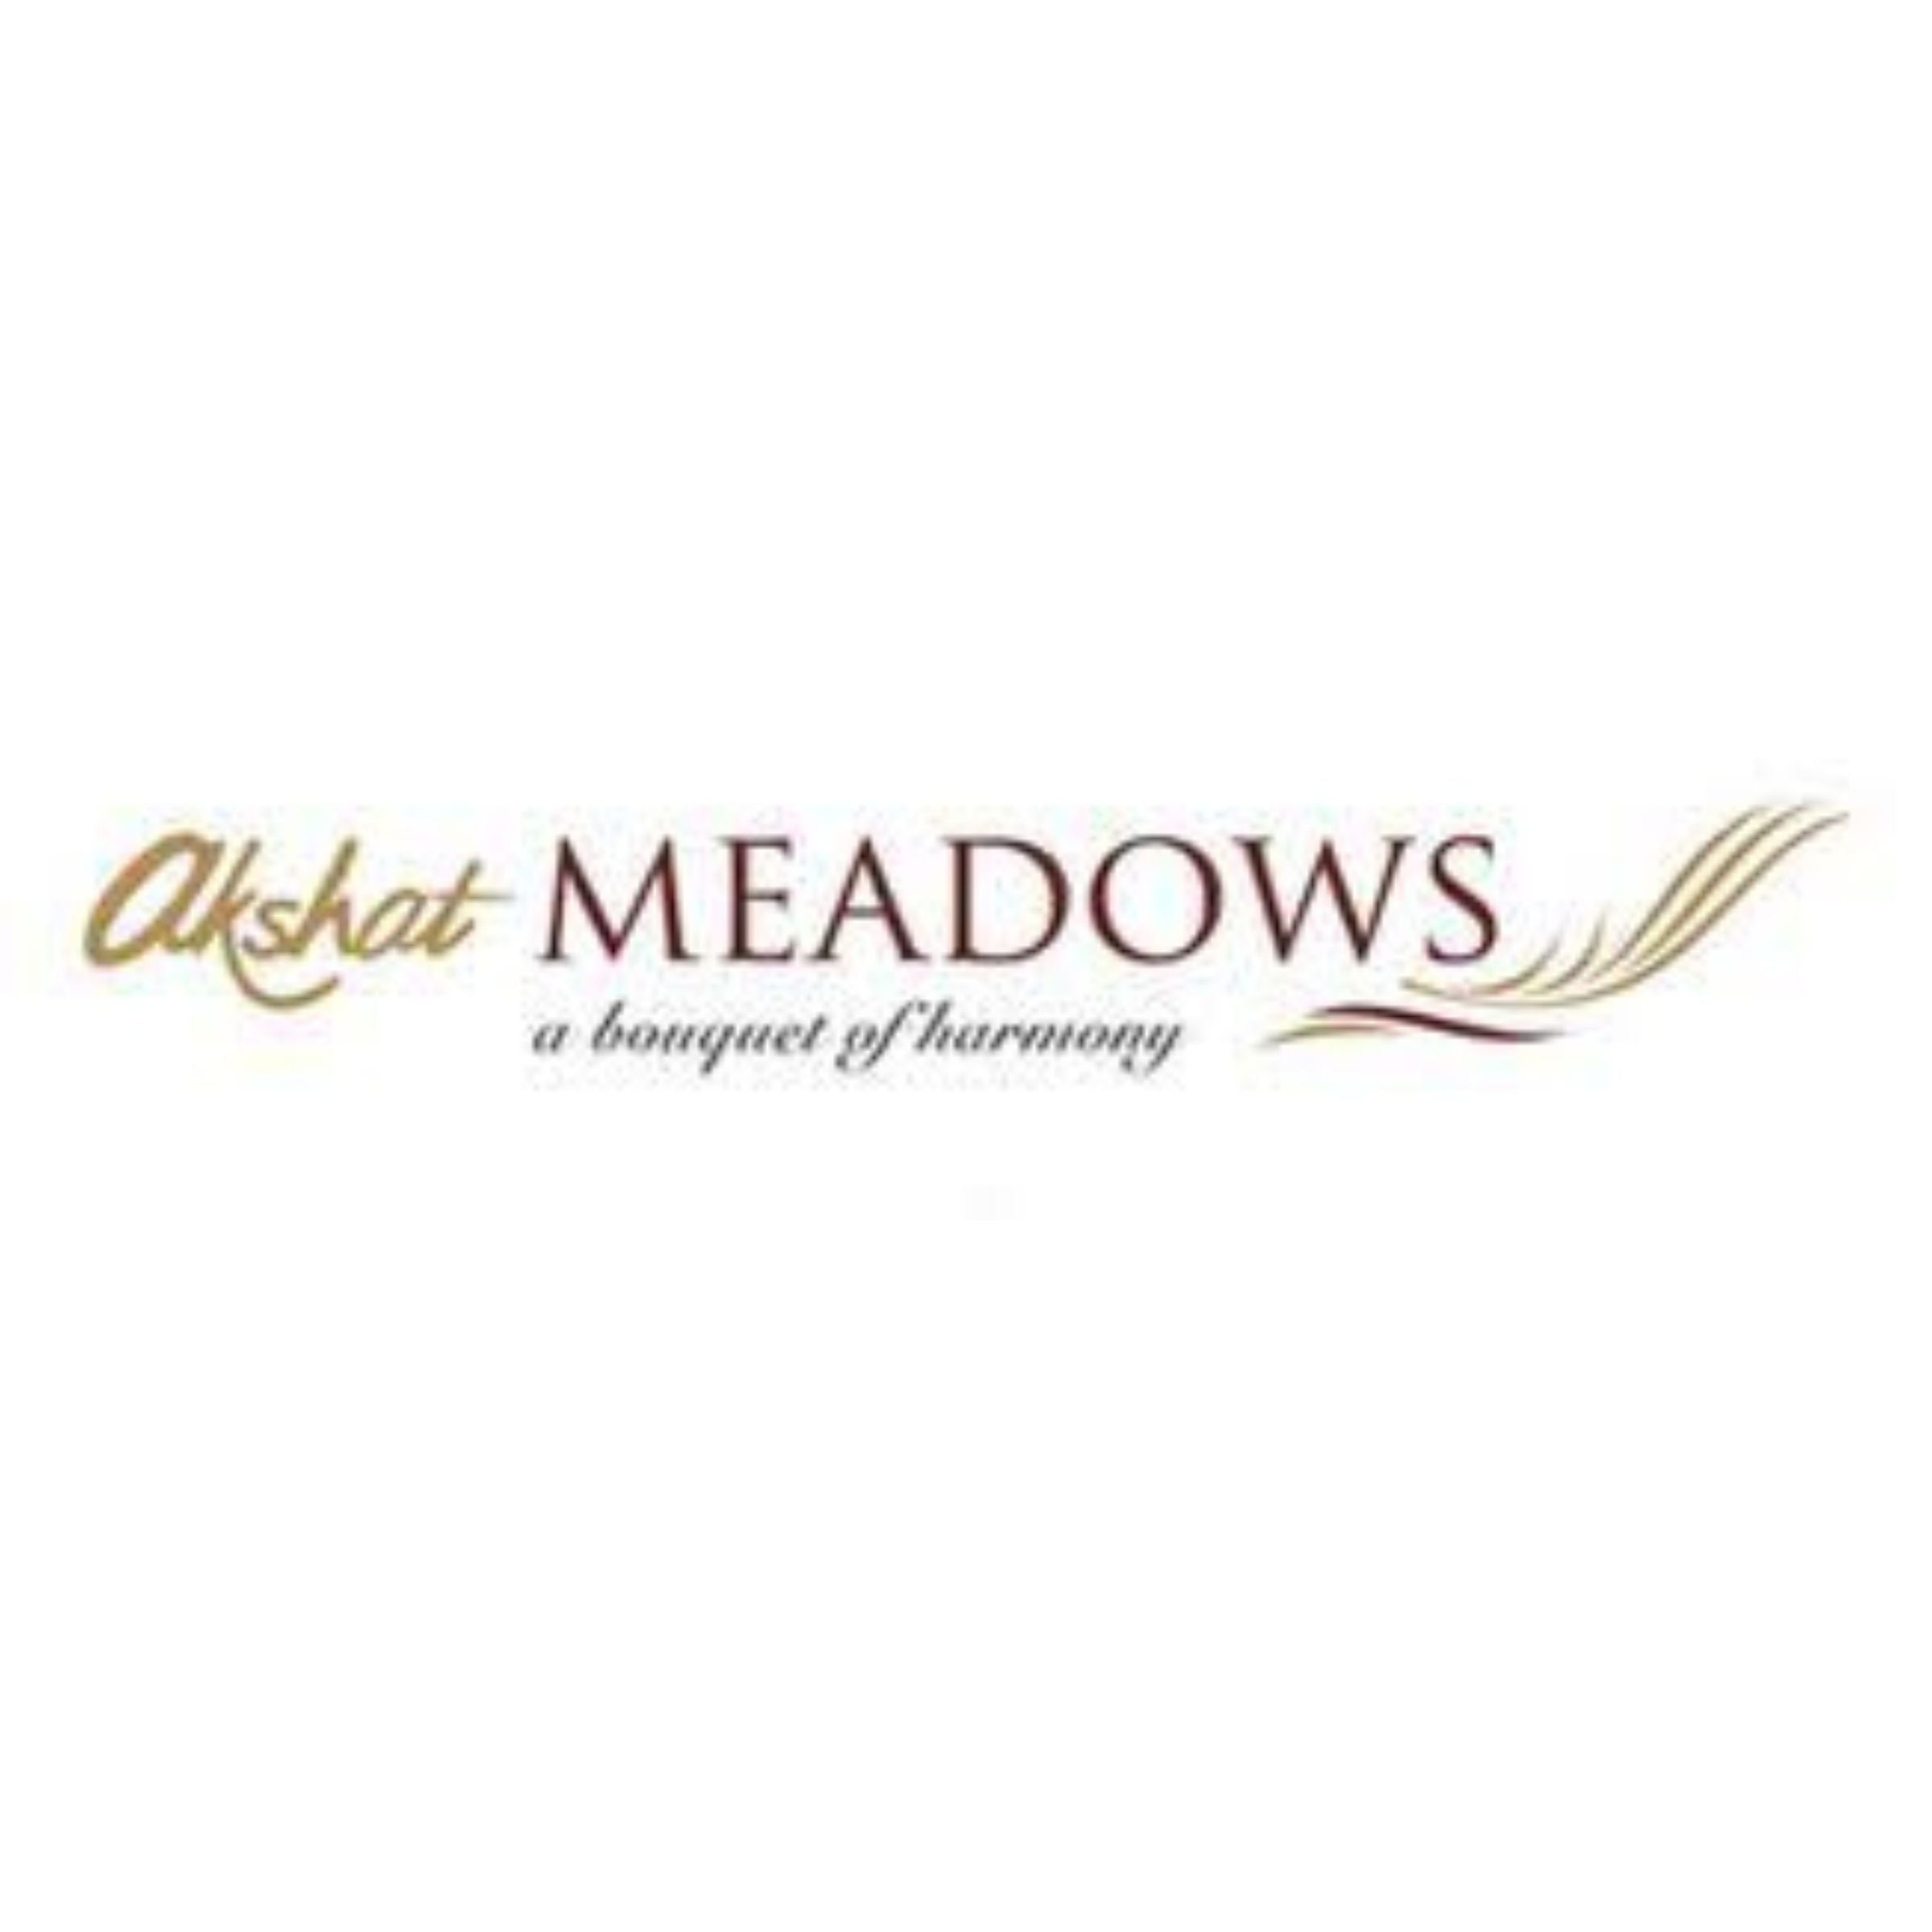 Akshat Meadows Logo